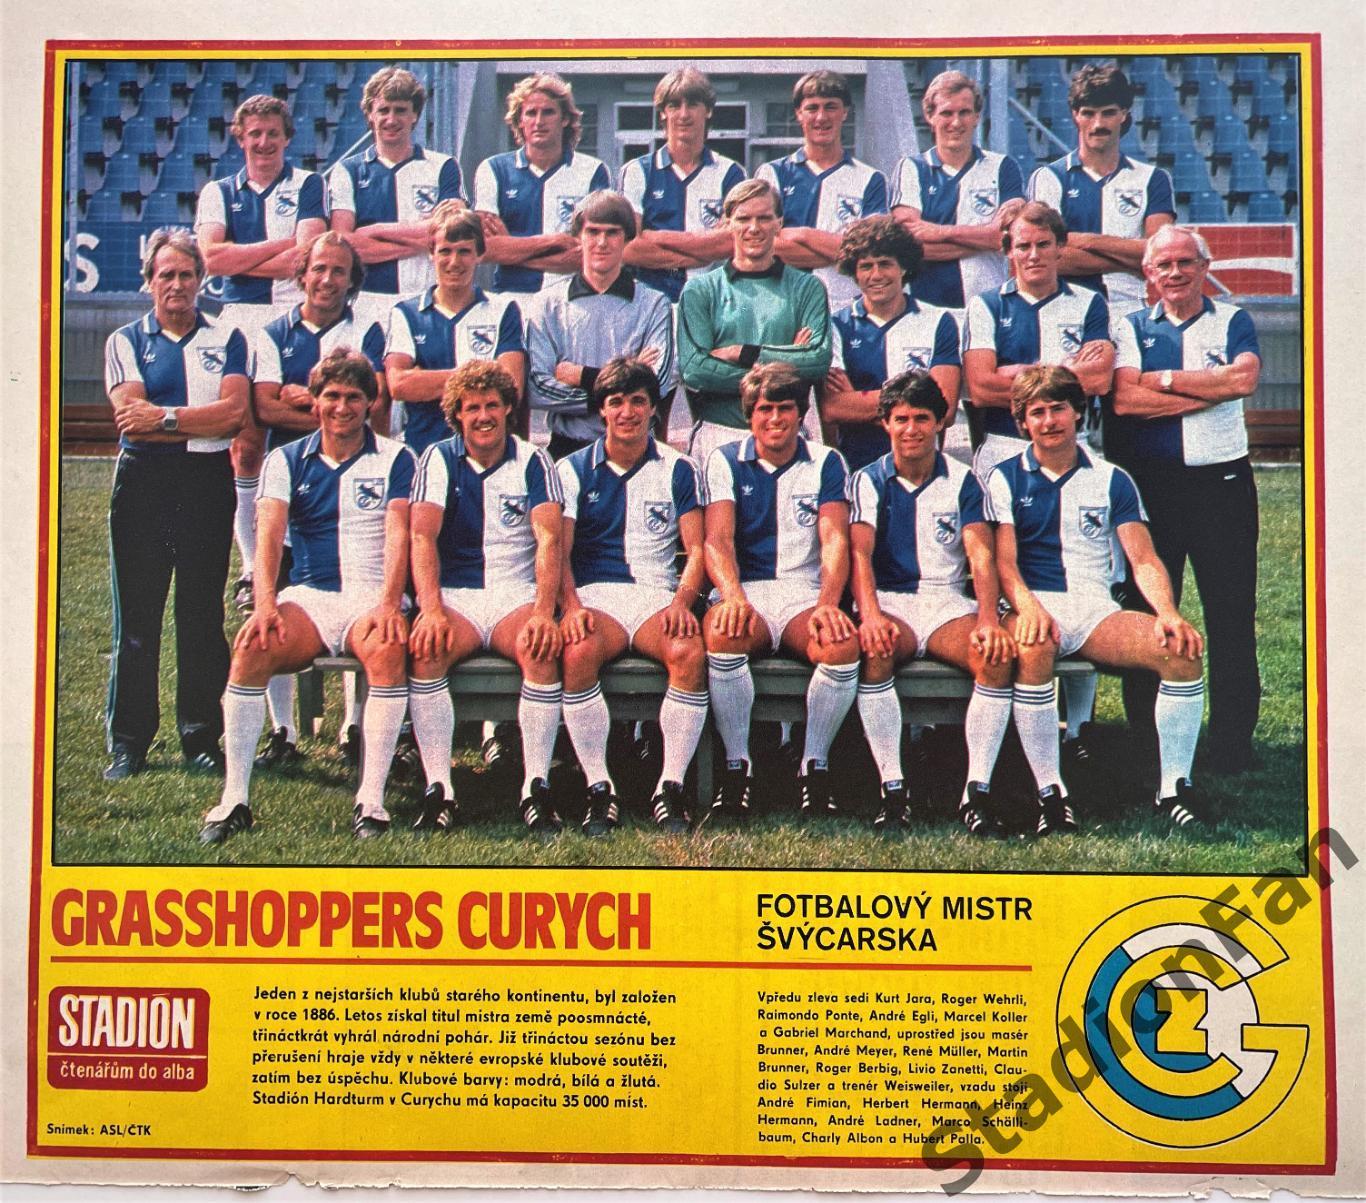 Постер из журнала Стадион (Stadion) - Grasshoppers, 1982.